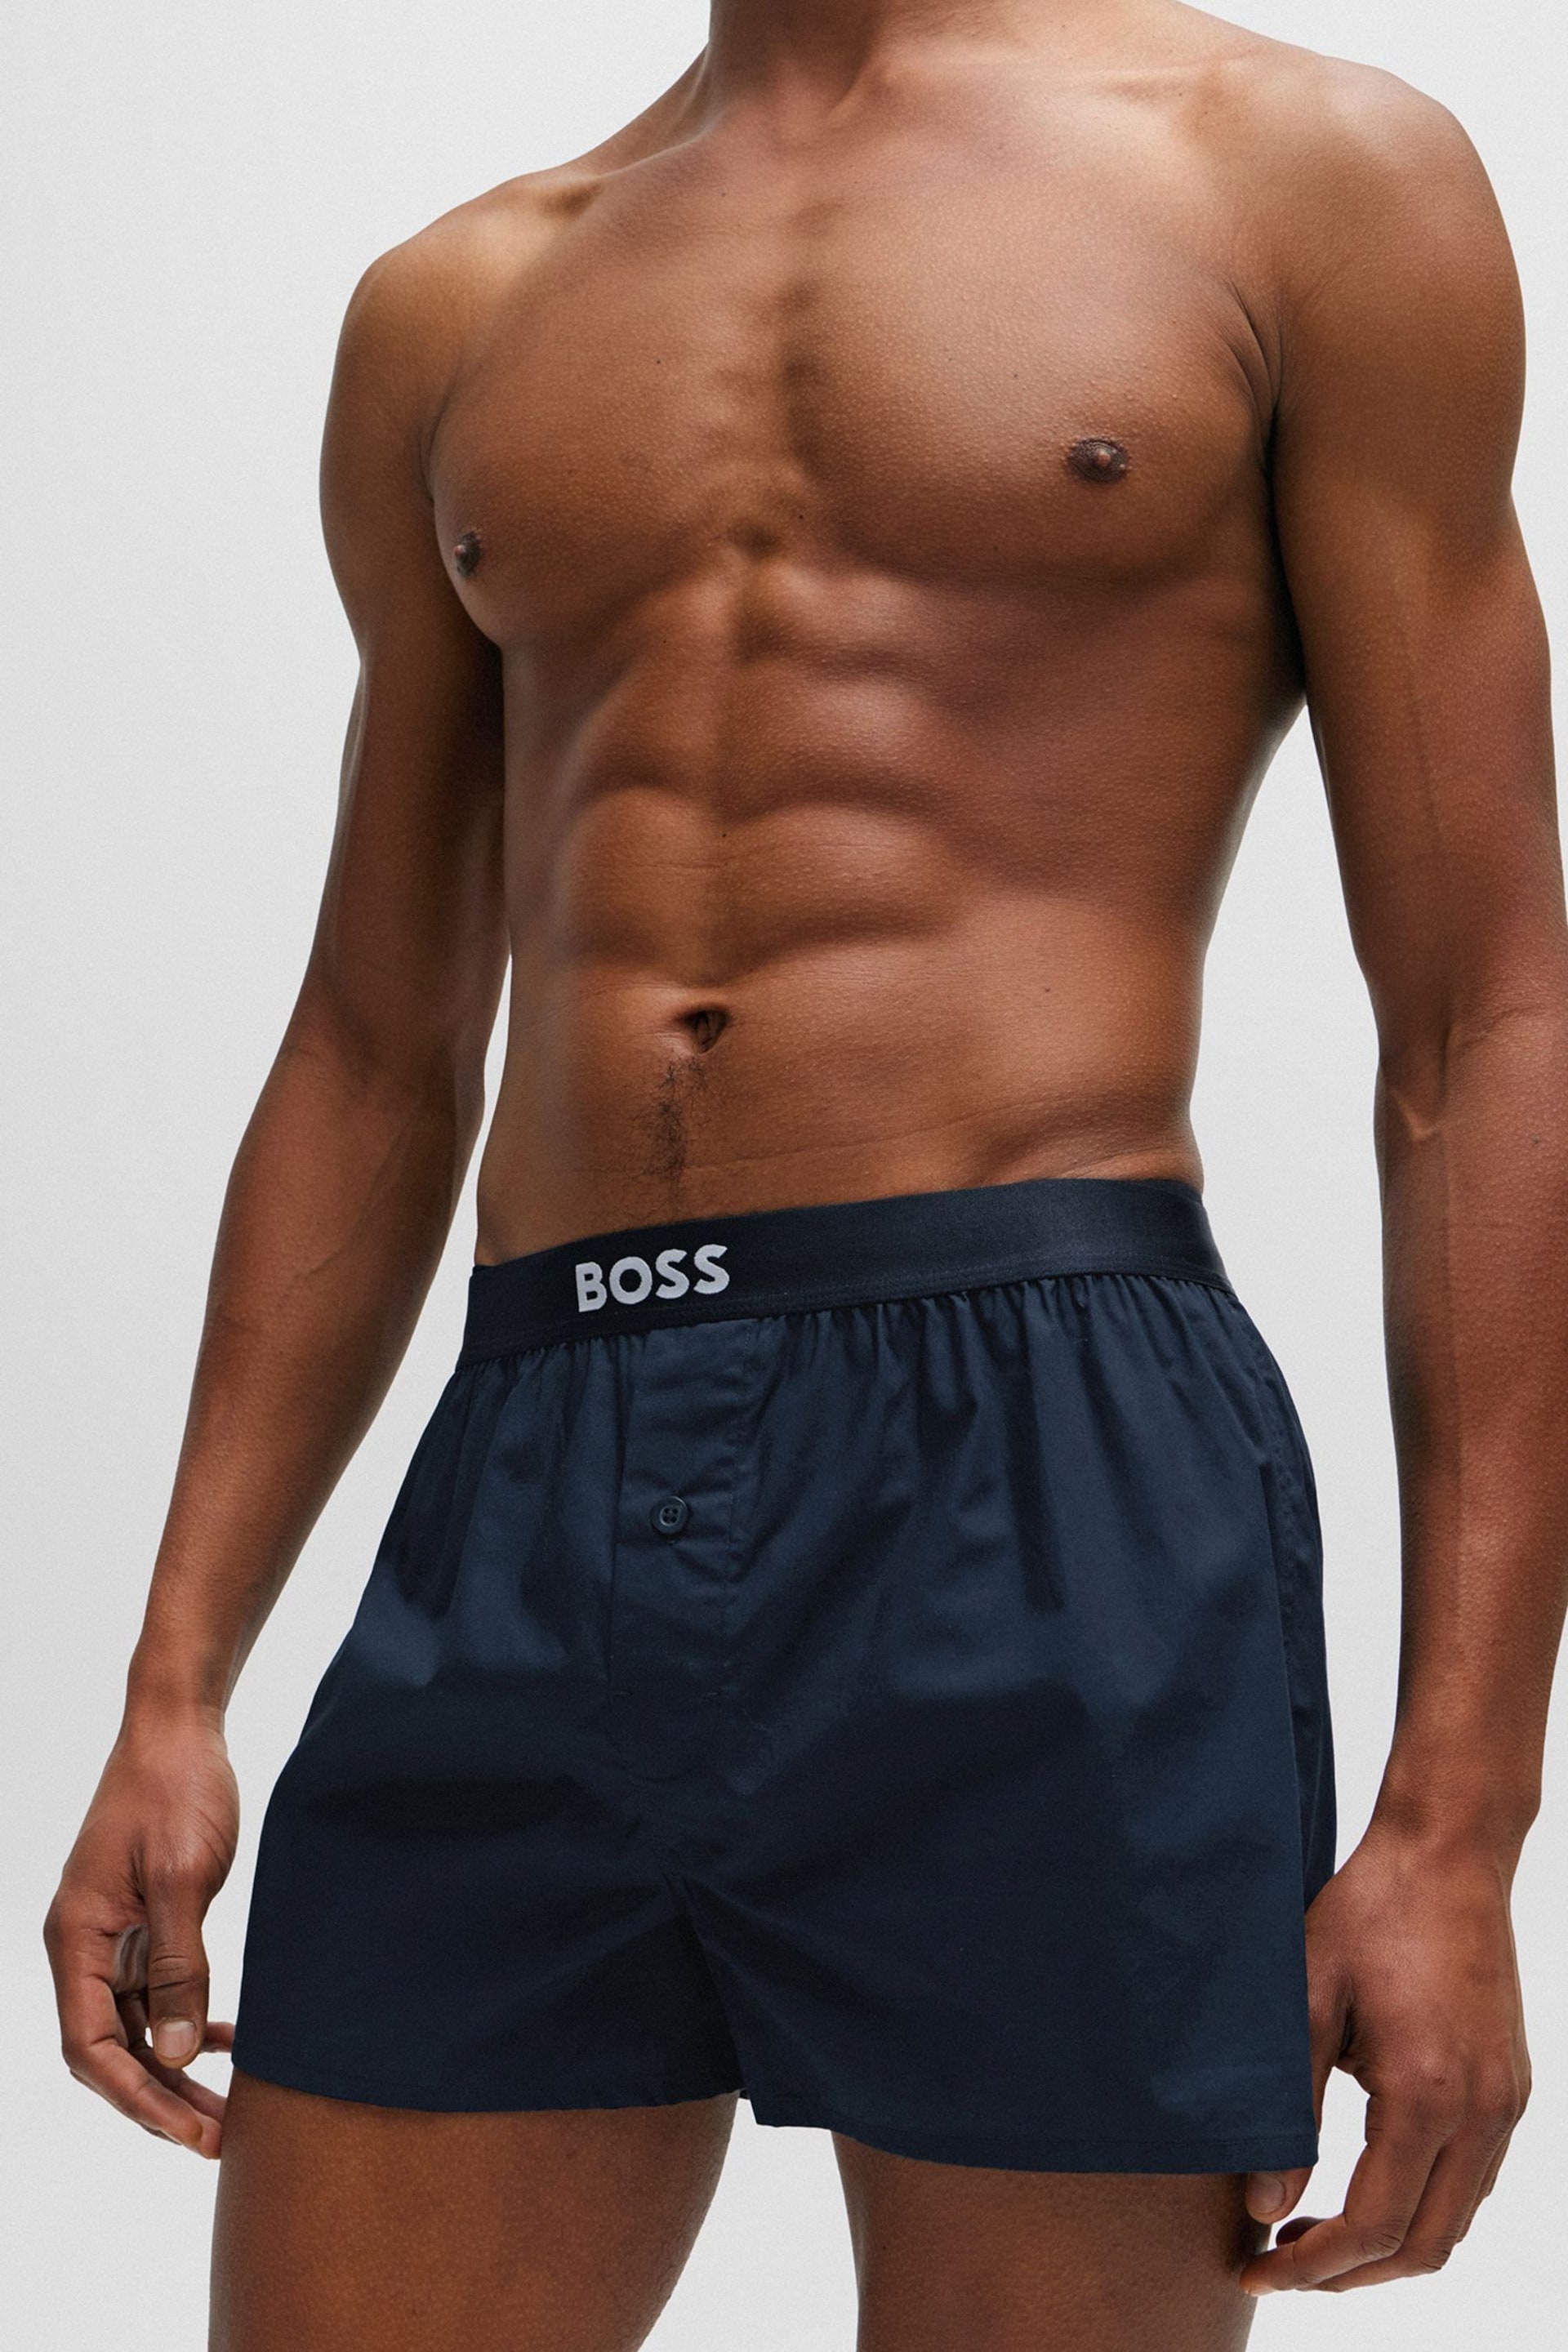 BOSS Blue Cotton Pyjama Shorts 2 Pack With Logo Waistbands - Image 6 of 6